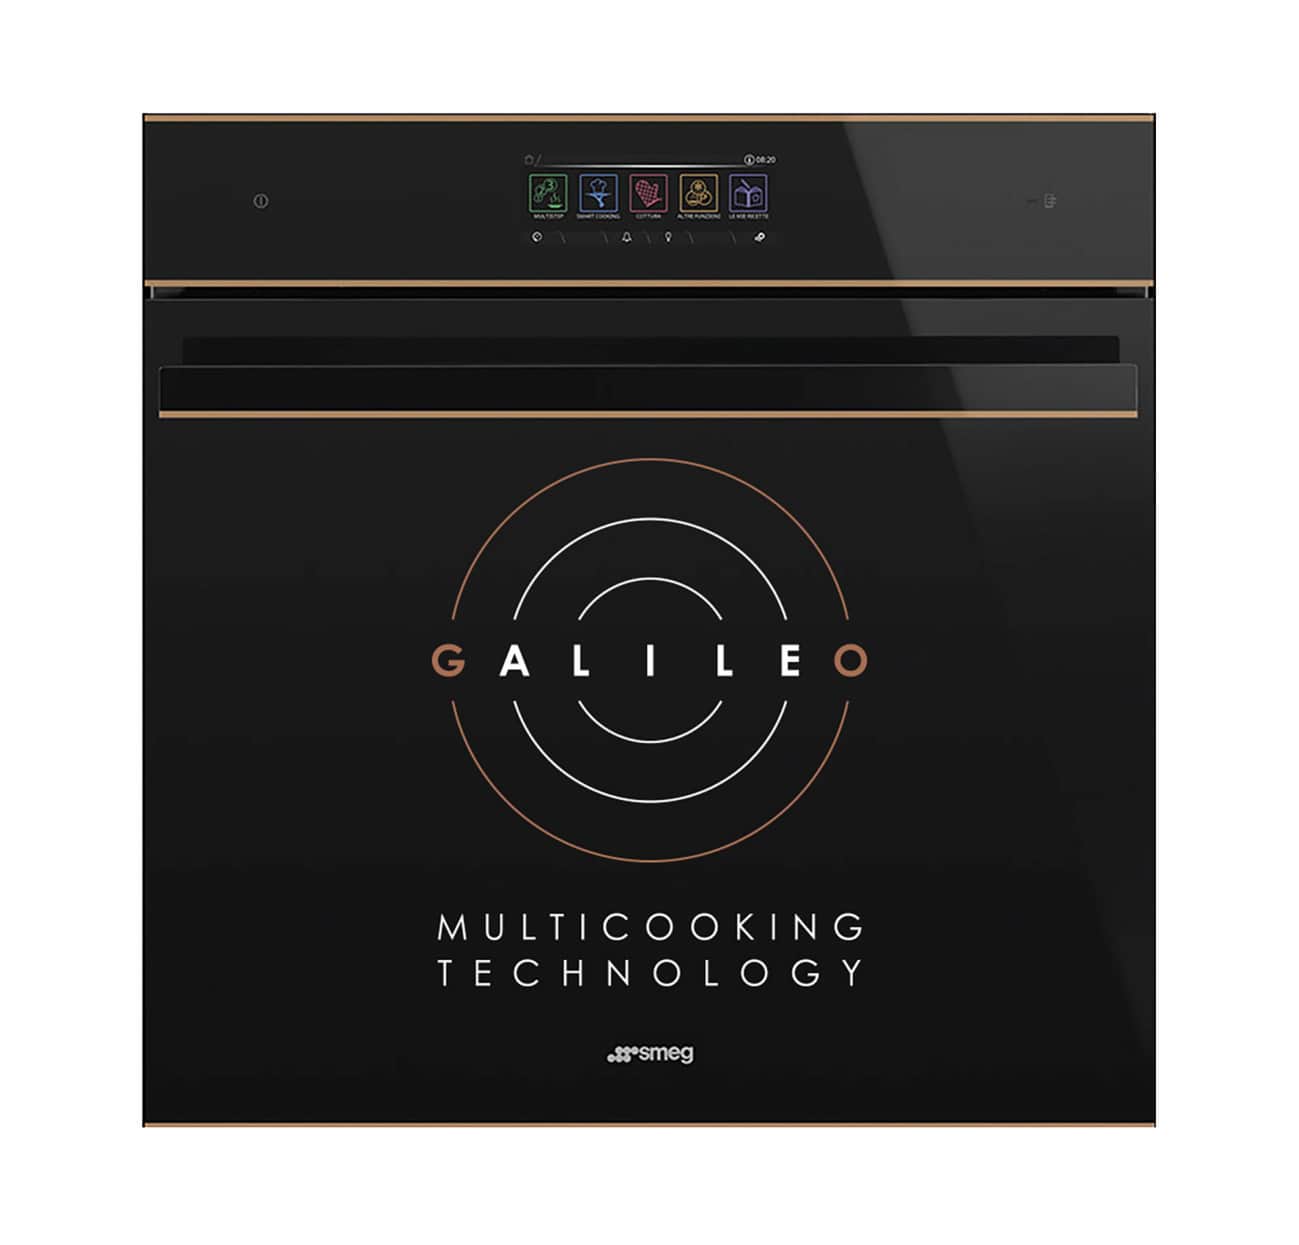 Smeg Multifunktionsbackofen Galileo Omnichef.